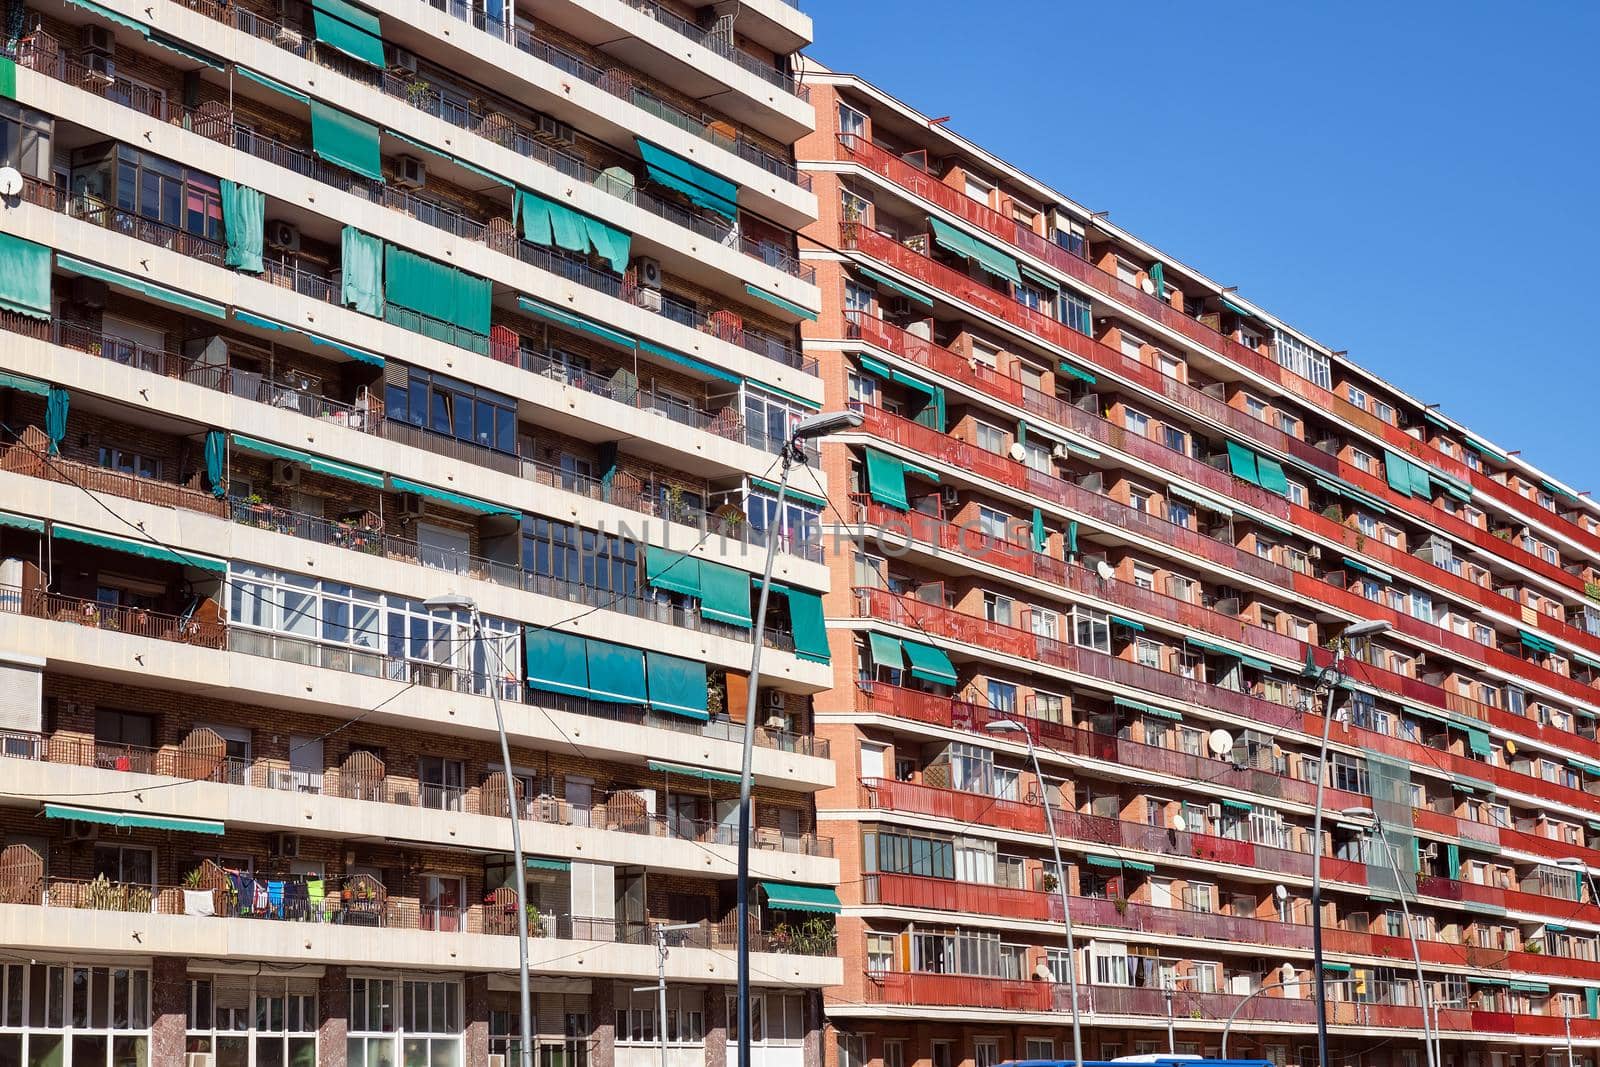 Large apartment buildings seen in Barcelona, Spain